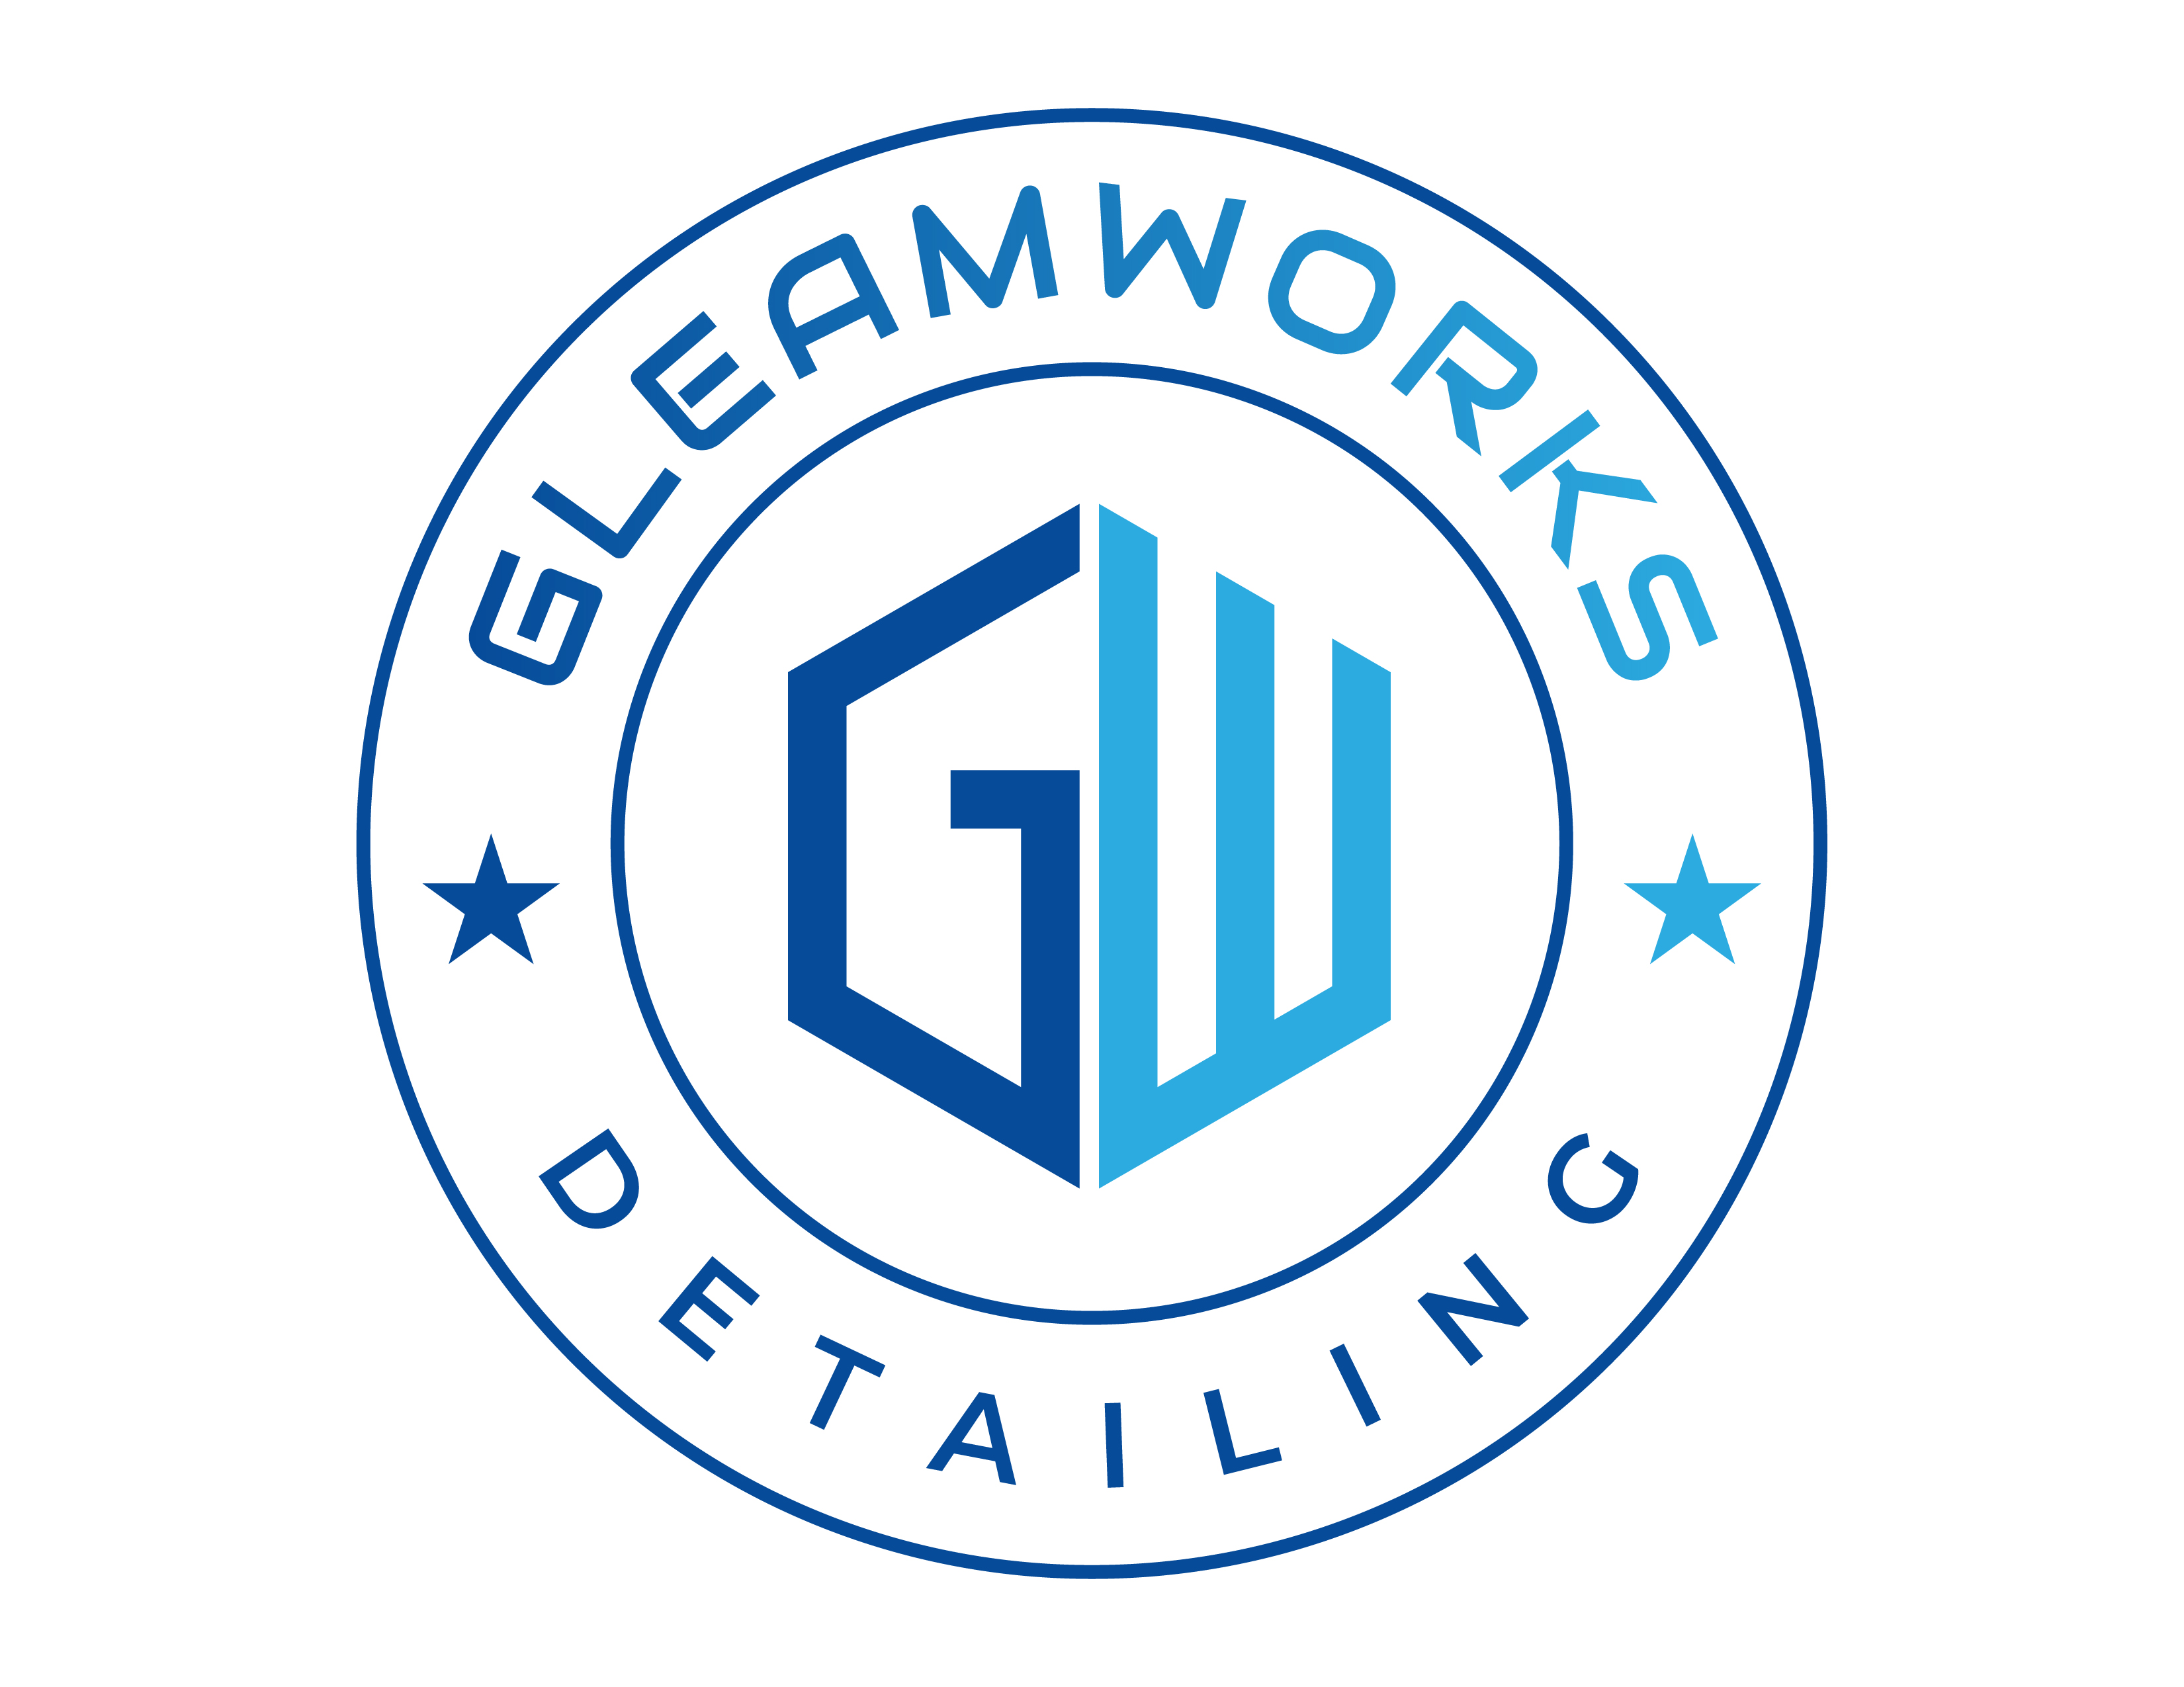 Gleamworks Detailing